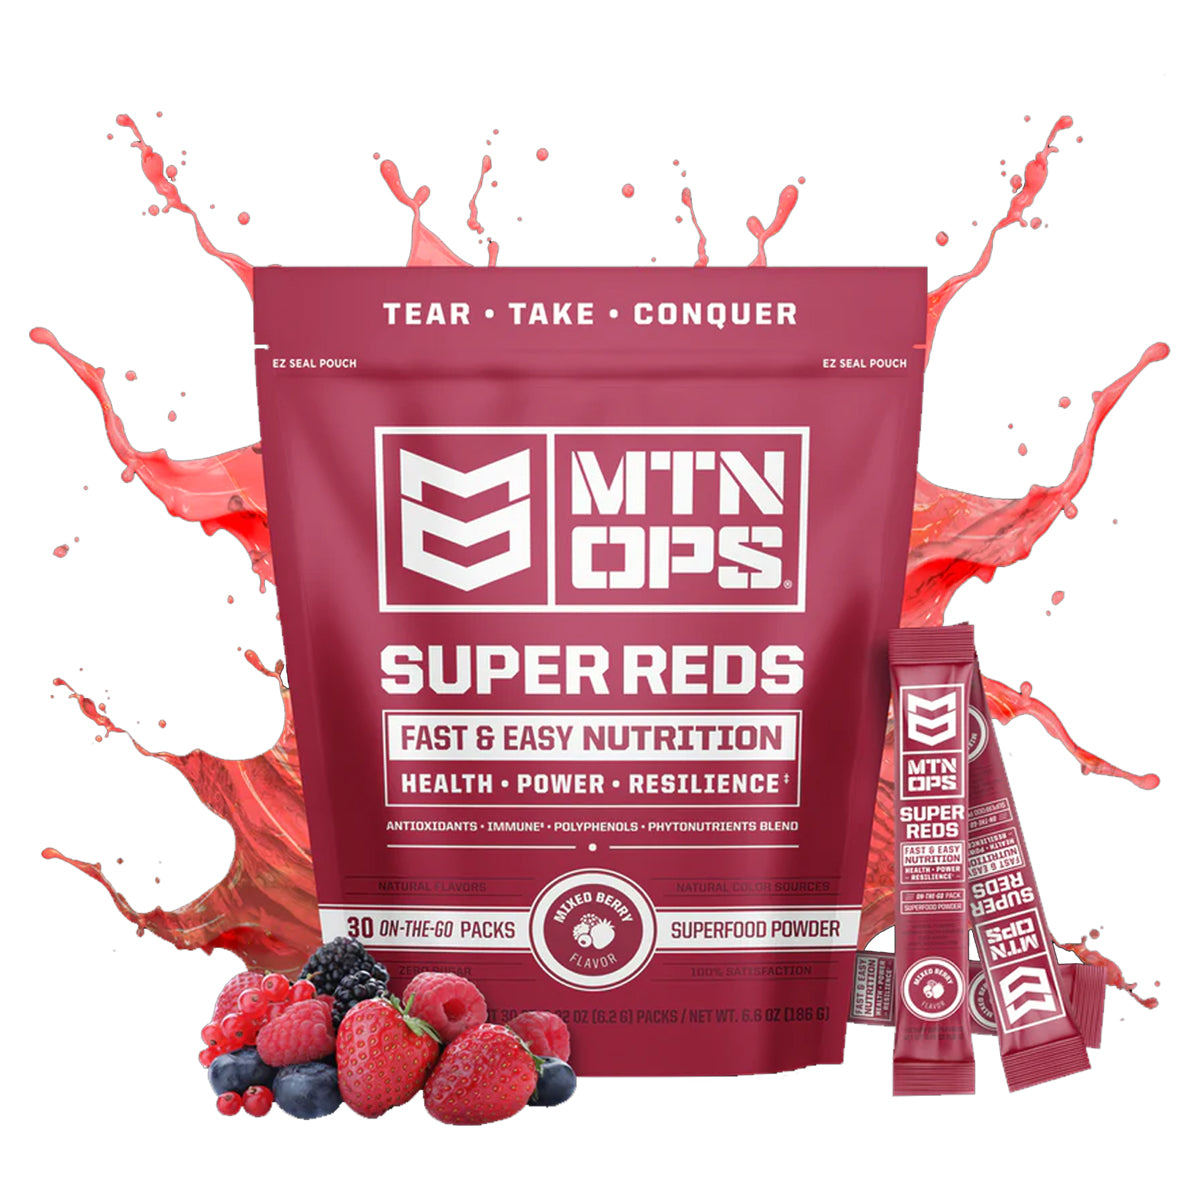 MTN OPS Super Reds